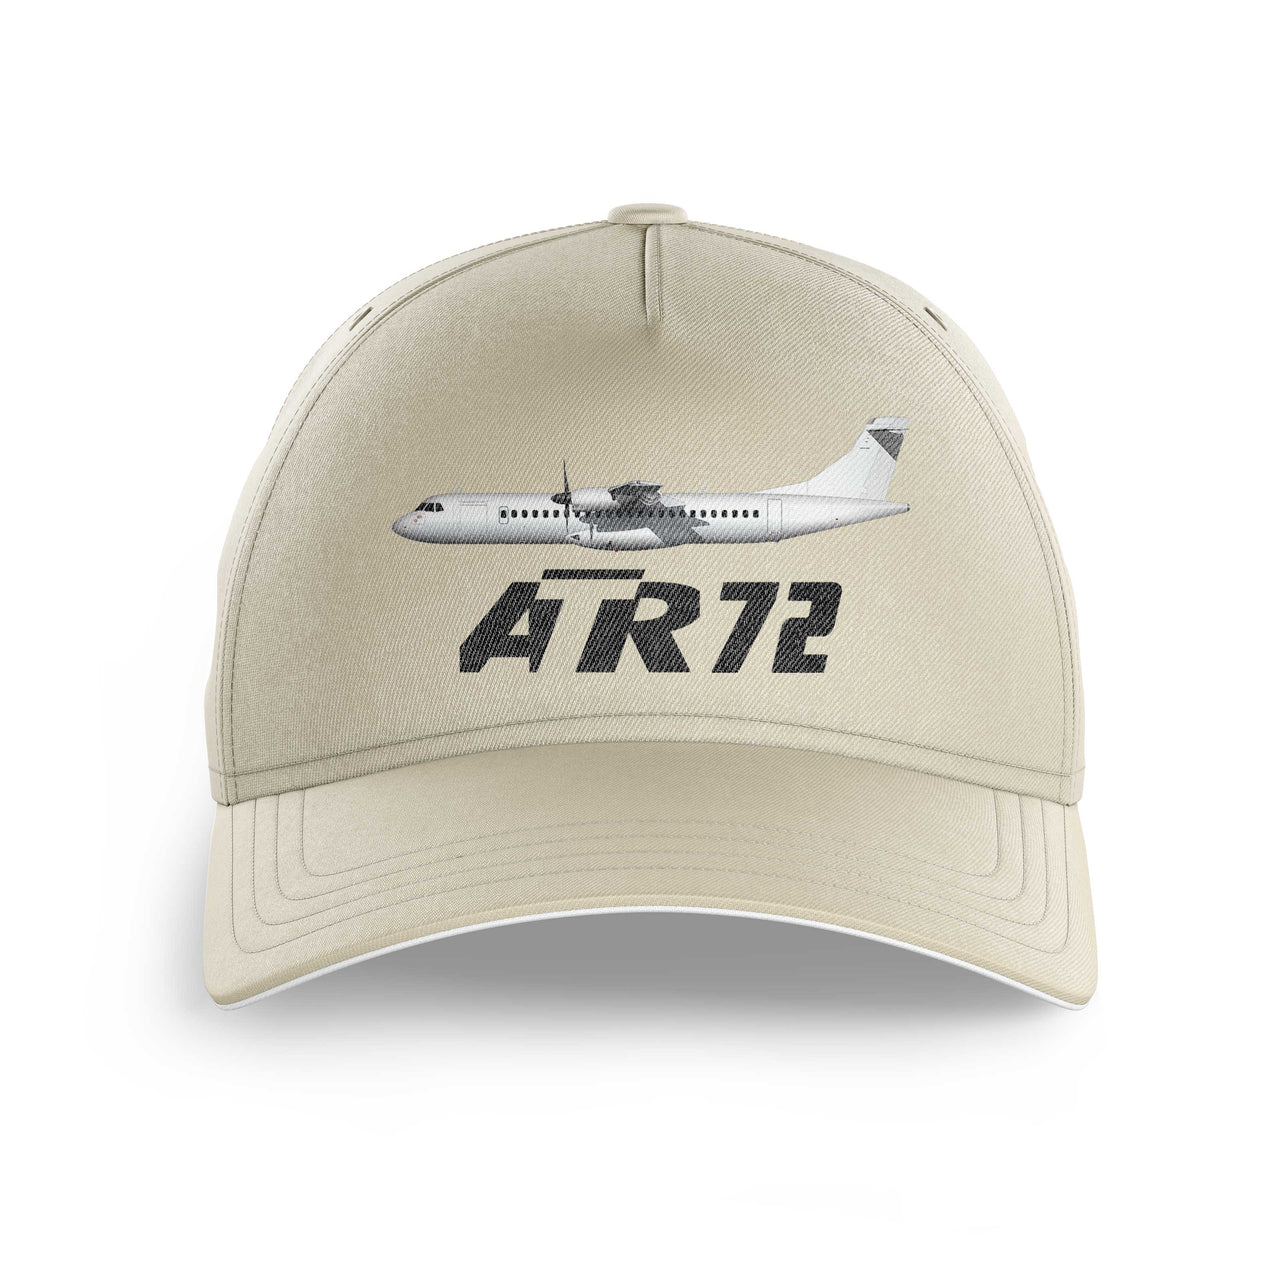 The ATR72 Printed Hats